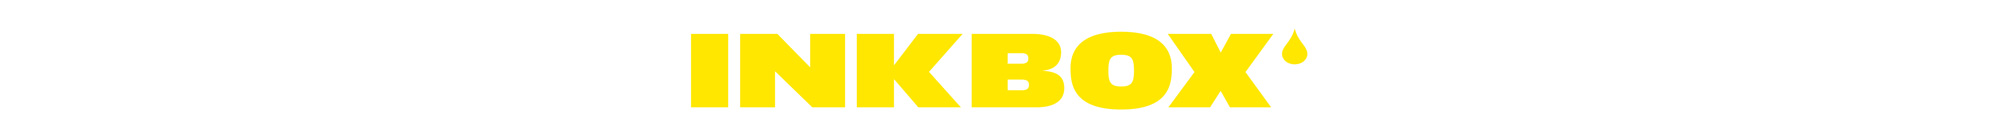 Inkbox_Wordmark+Symbol_Yellow_RGB_Large